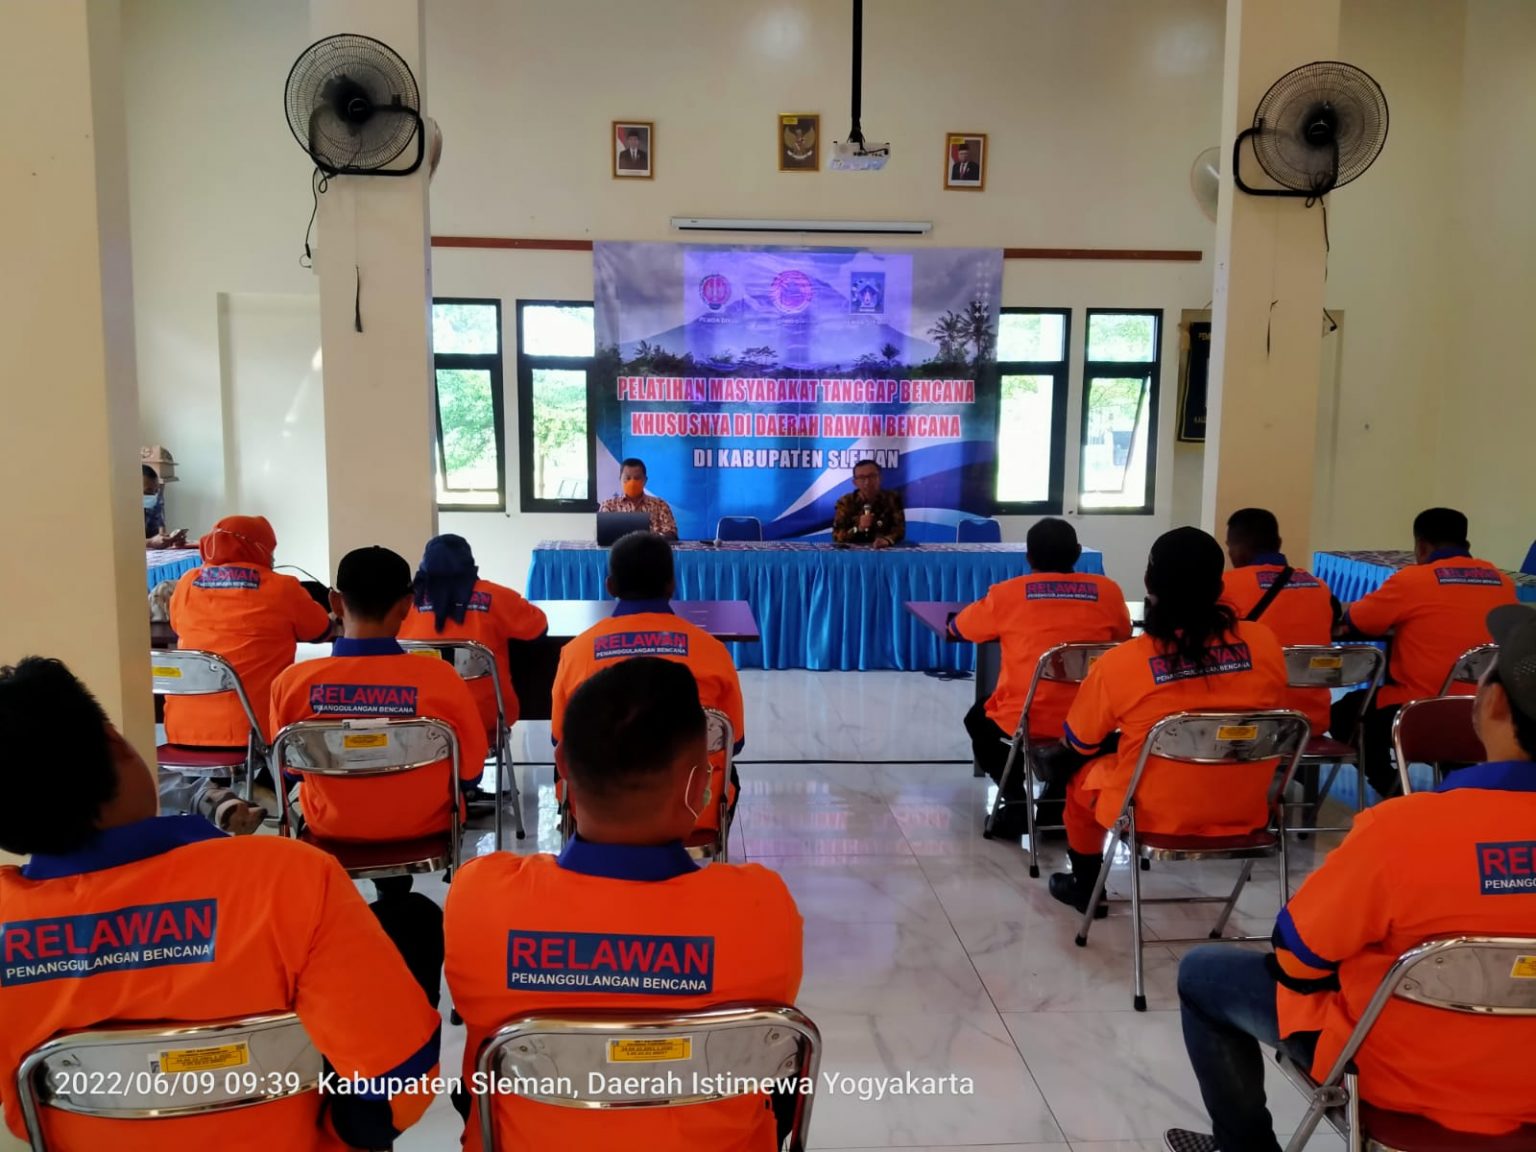 Pelatihan Logistik dan Barak Pengungsian Masyarakat Tanggap Bencana di Kalurahan Purwomartani